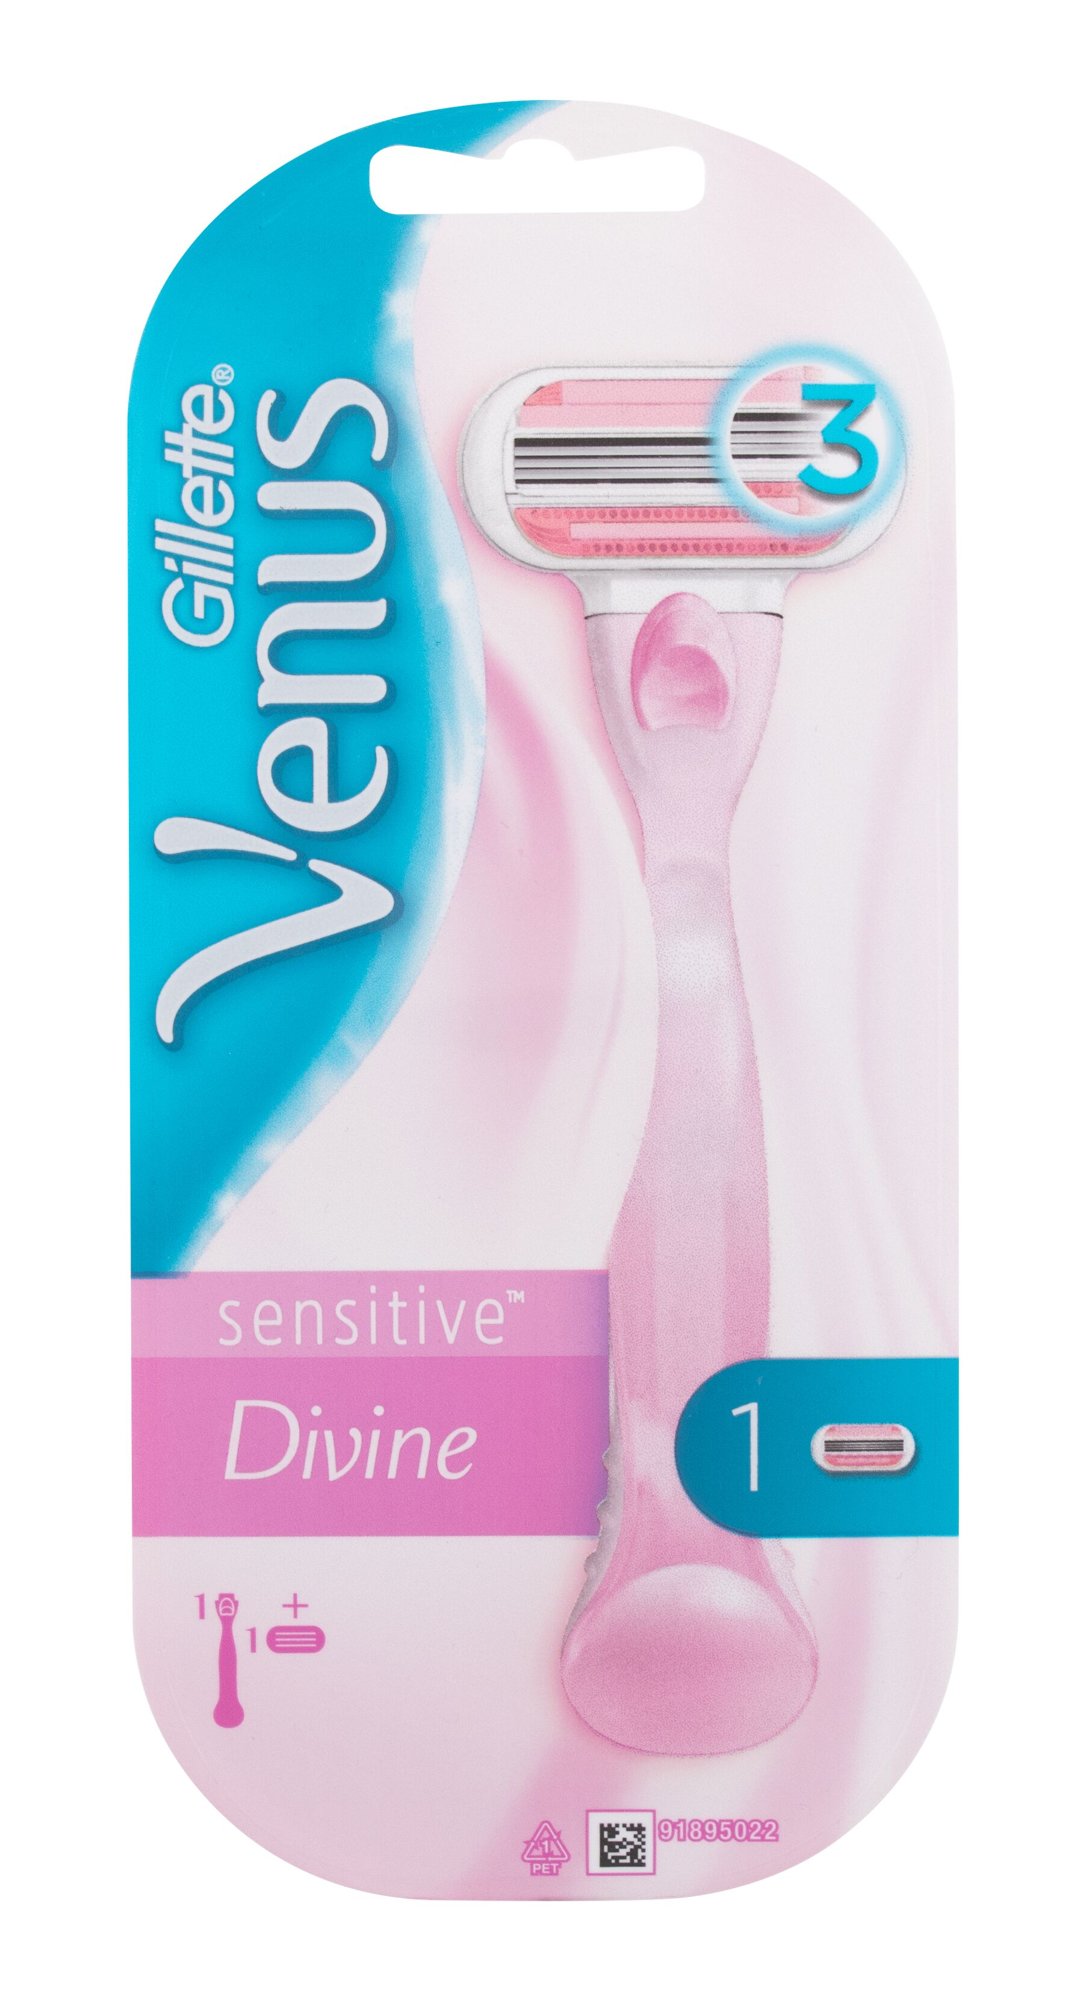 Gillette Venus Sensitive Divine skustuvas